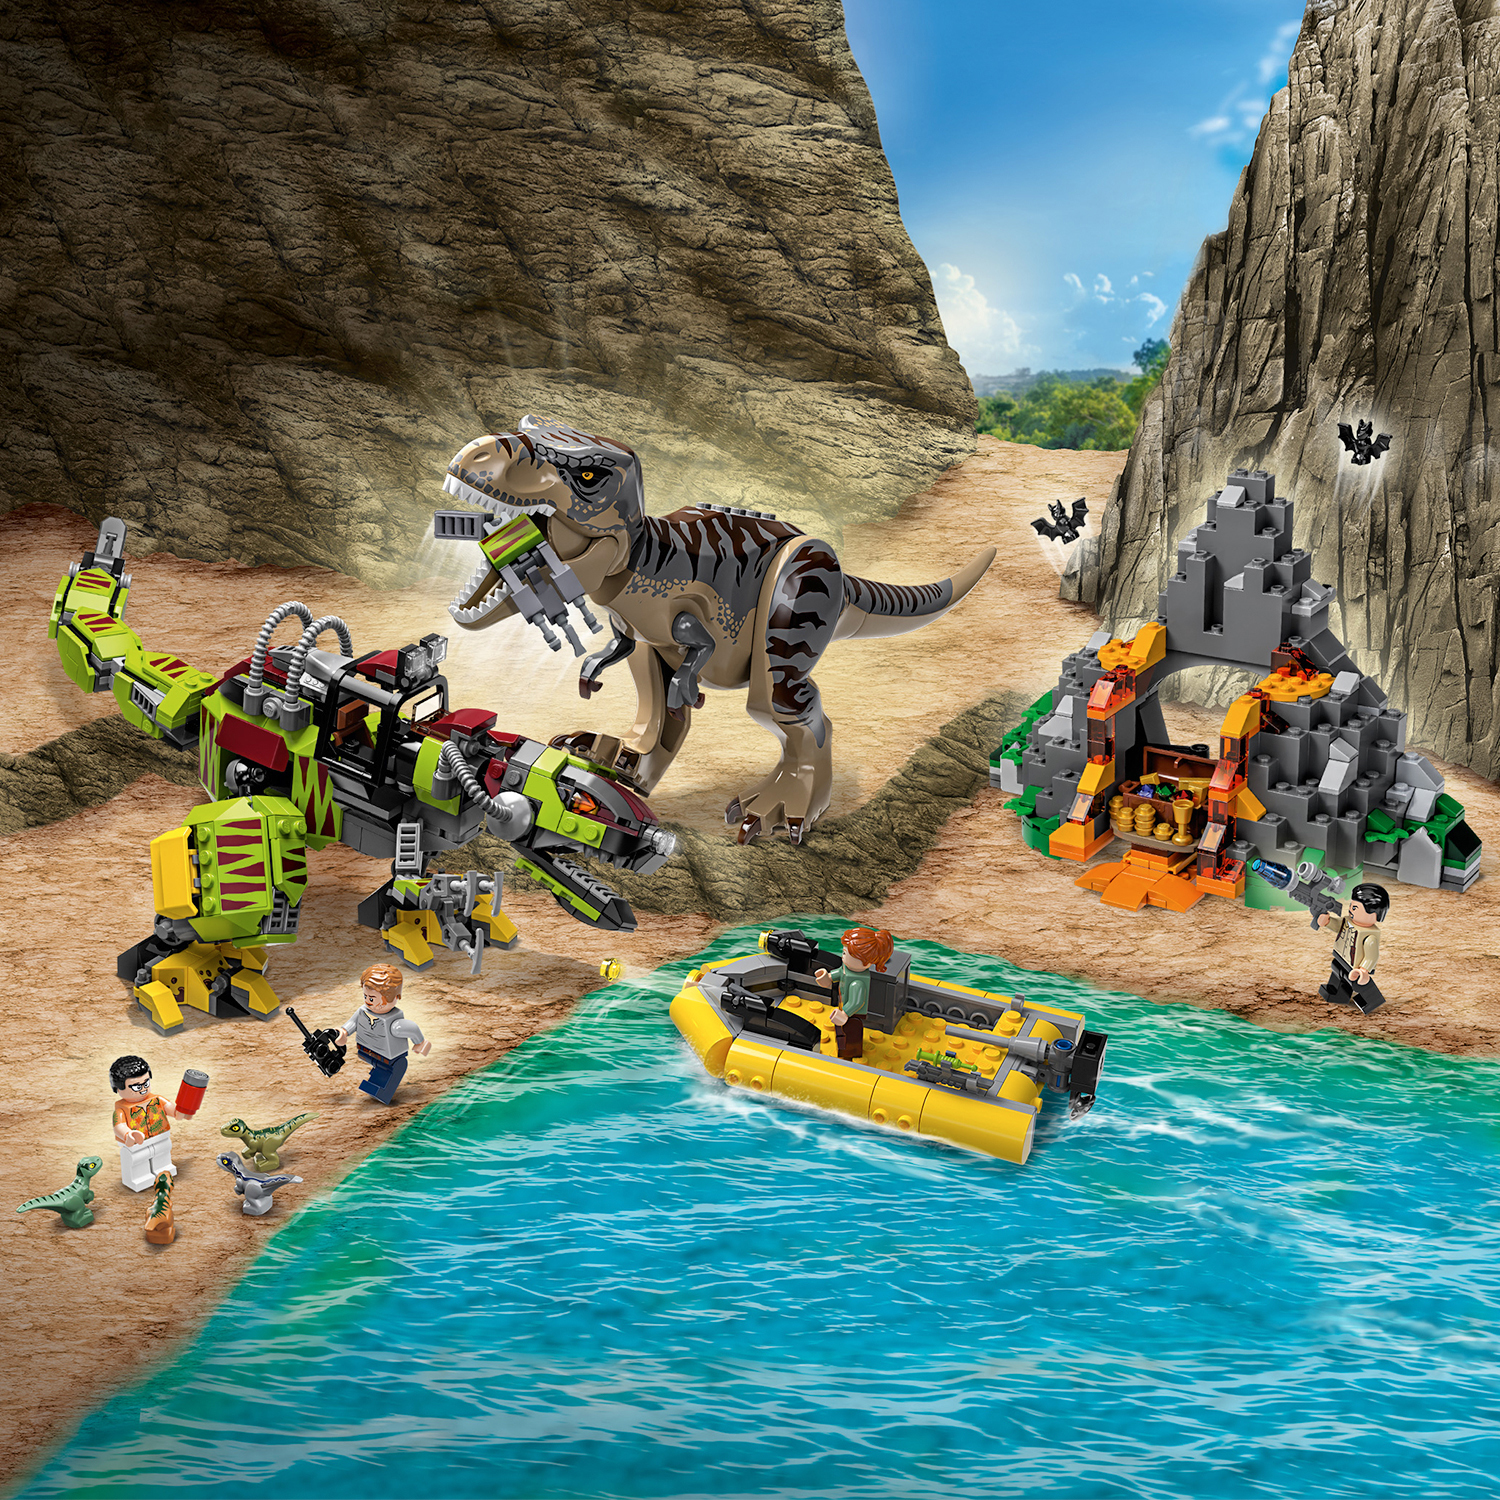 LEGO Jurassic World T. rex vs. Dino-Mech - 75938